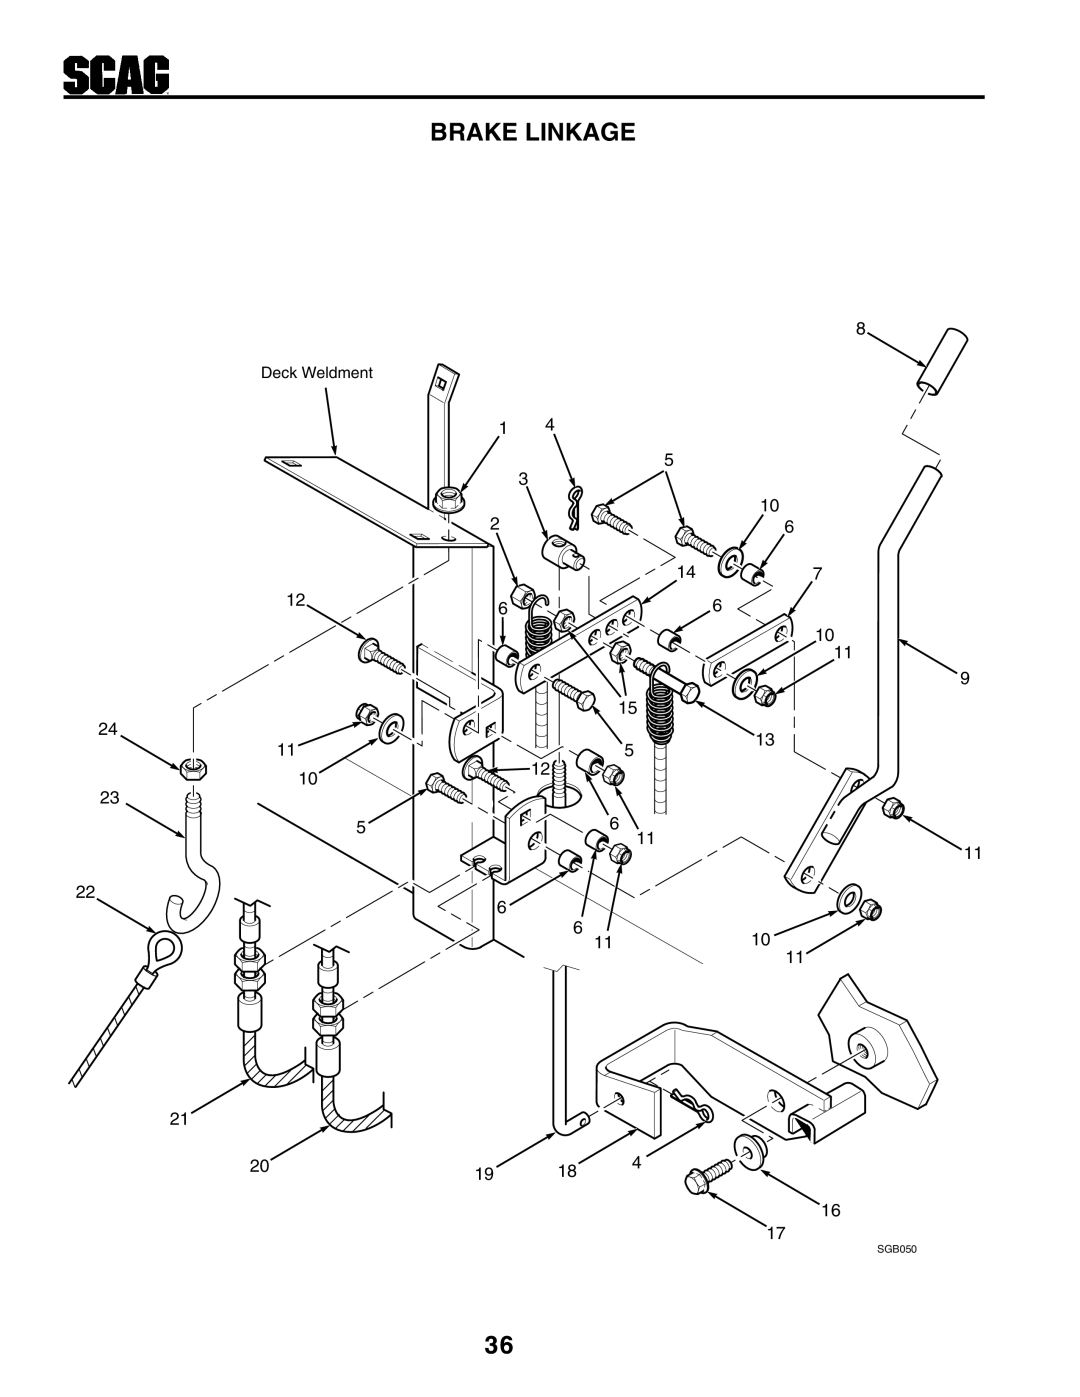 Scag Power Equipment STHM manual Brake Linkage, Deck Weldment, SGB050 